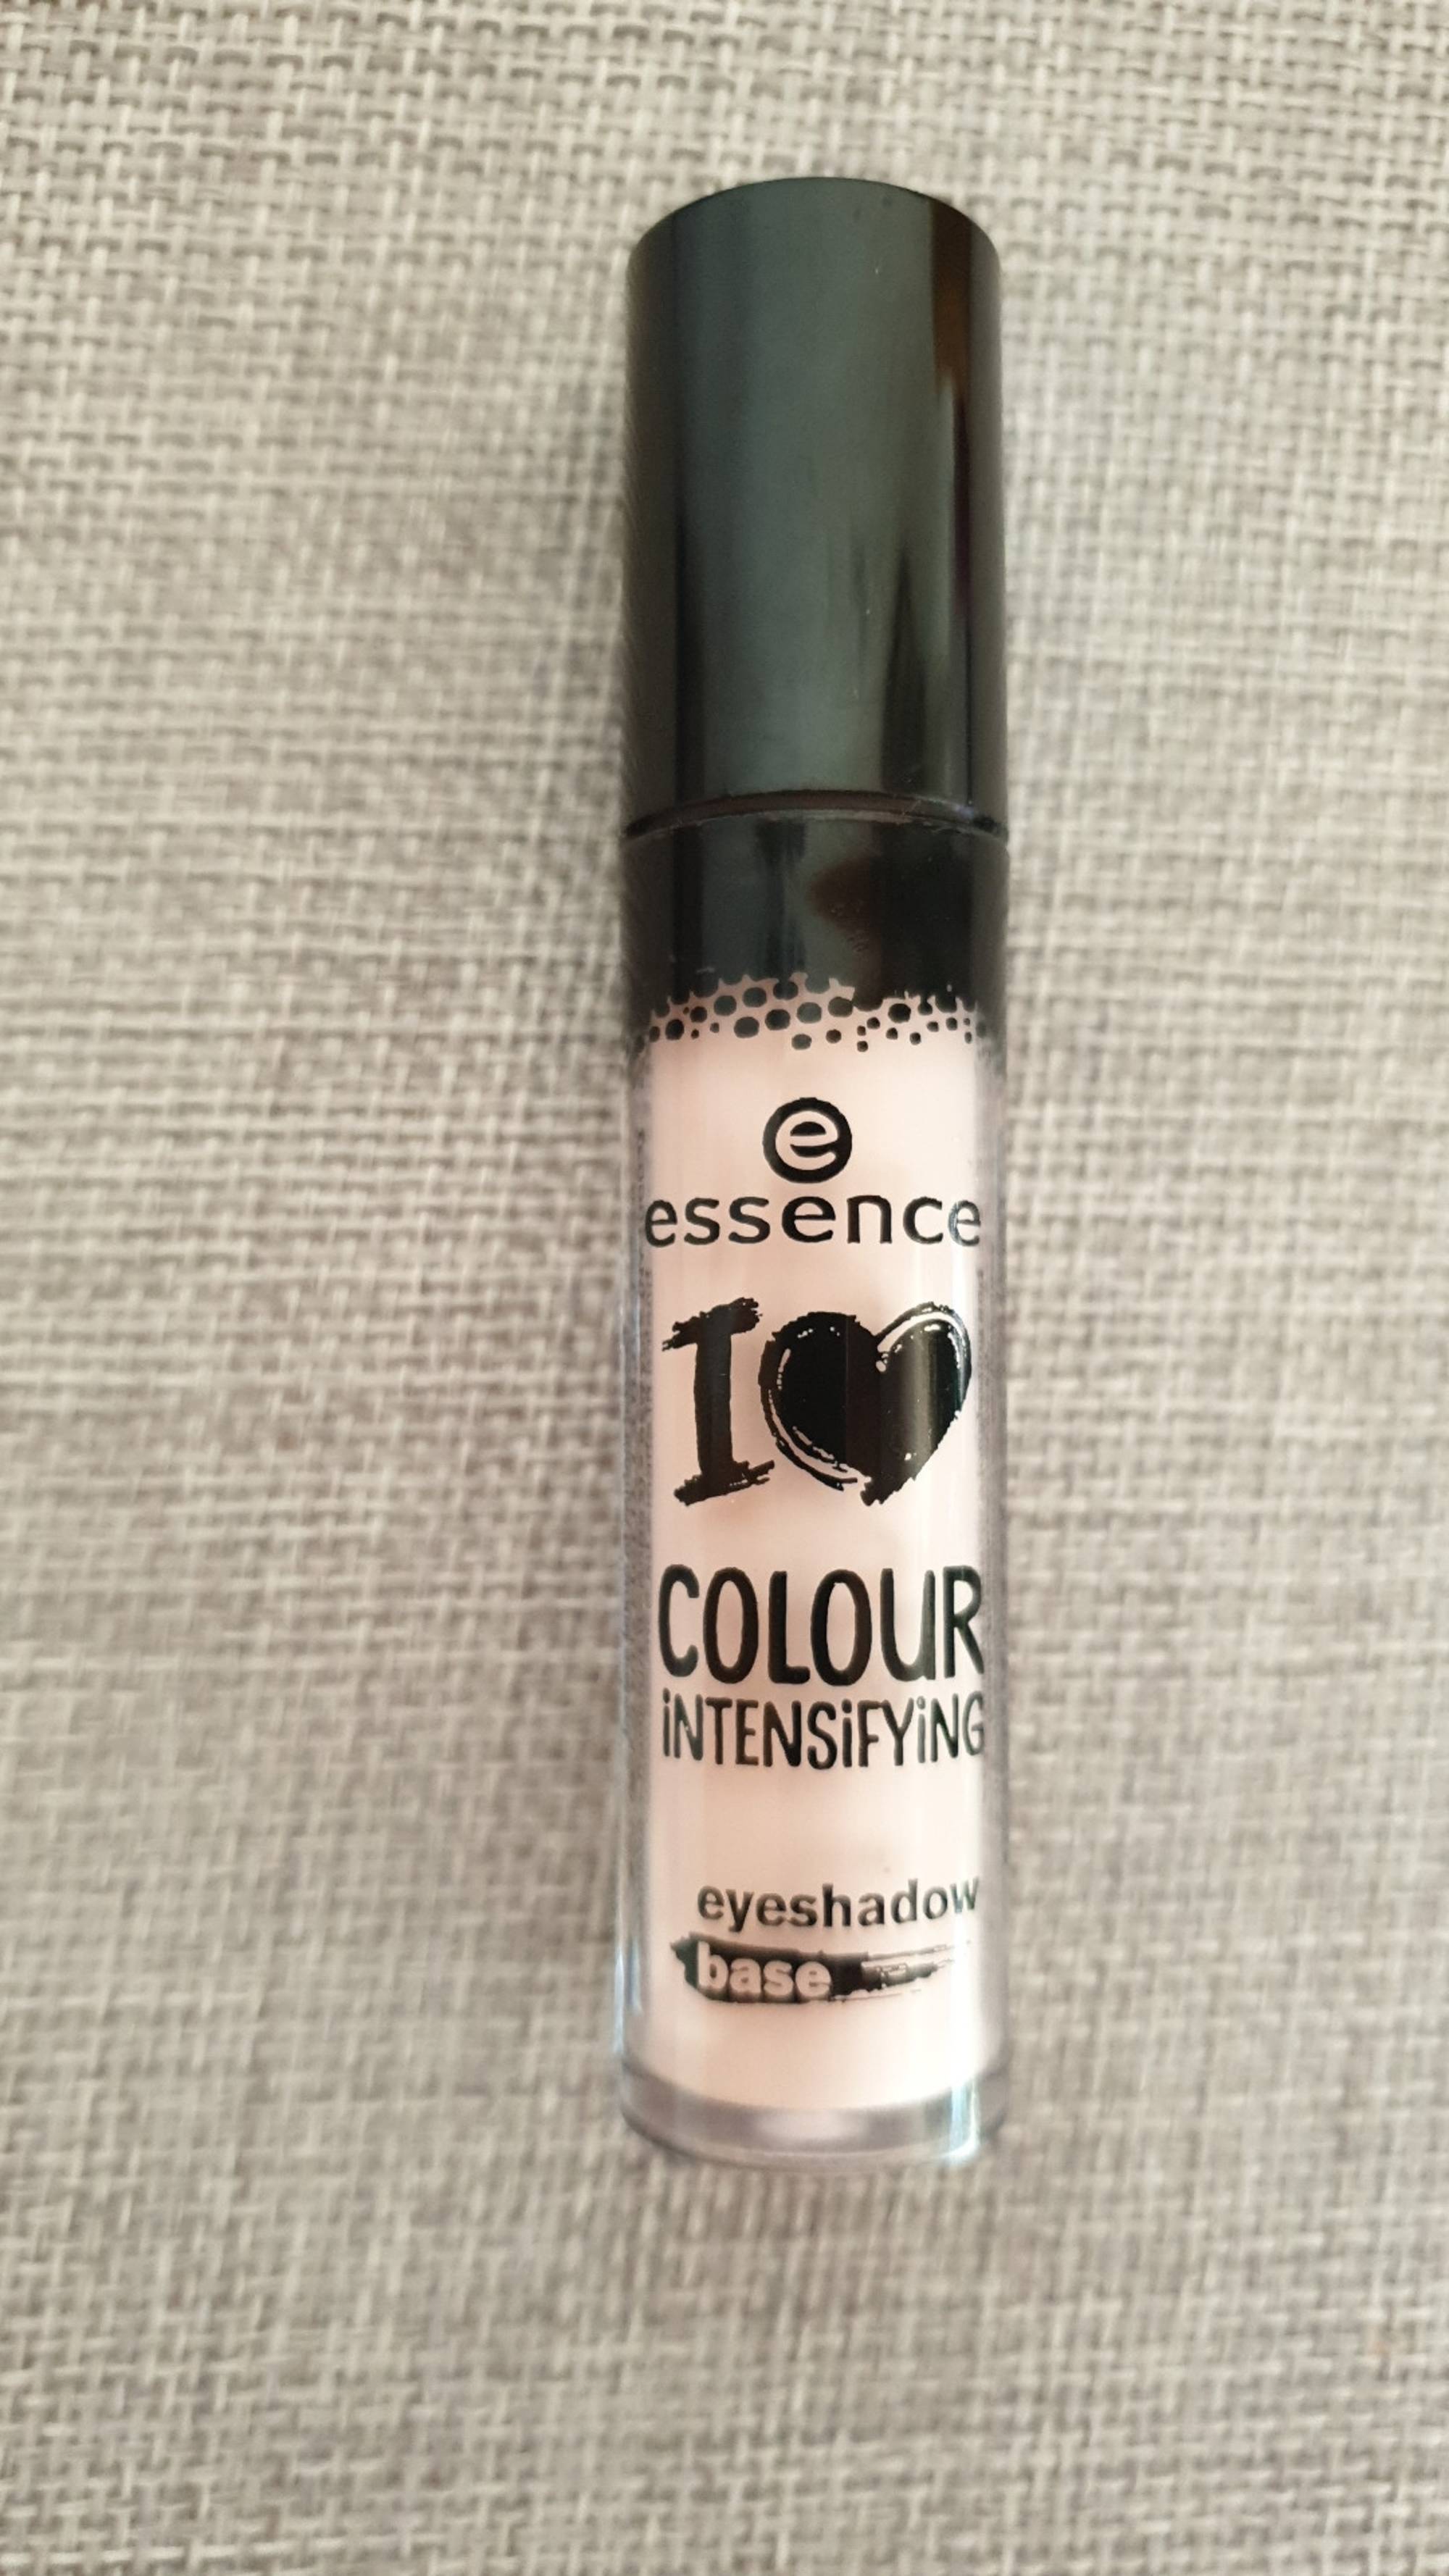 ESSENCE - I love colour intensifying - Eyeshadow base